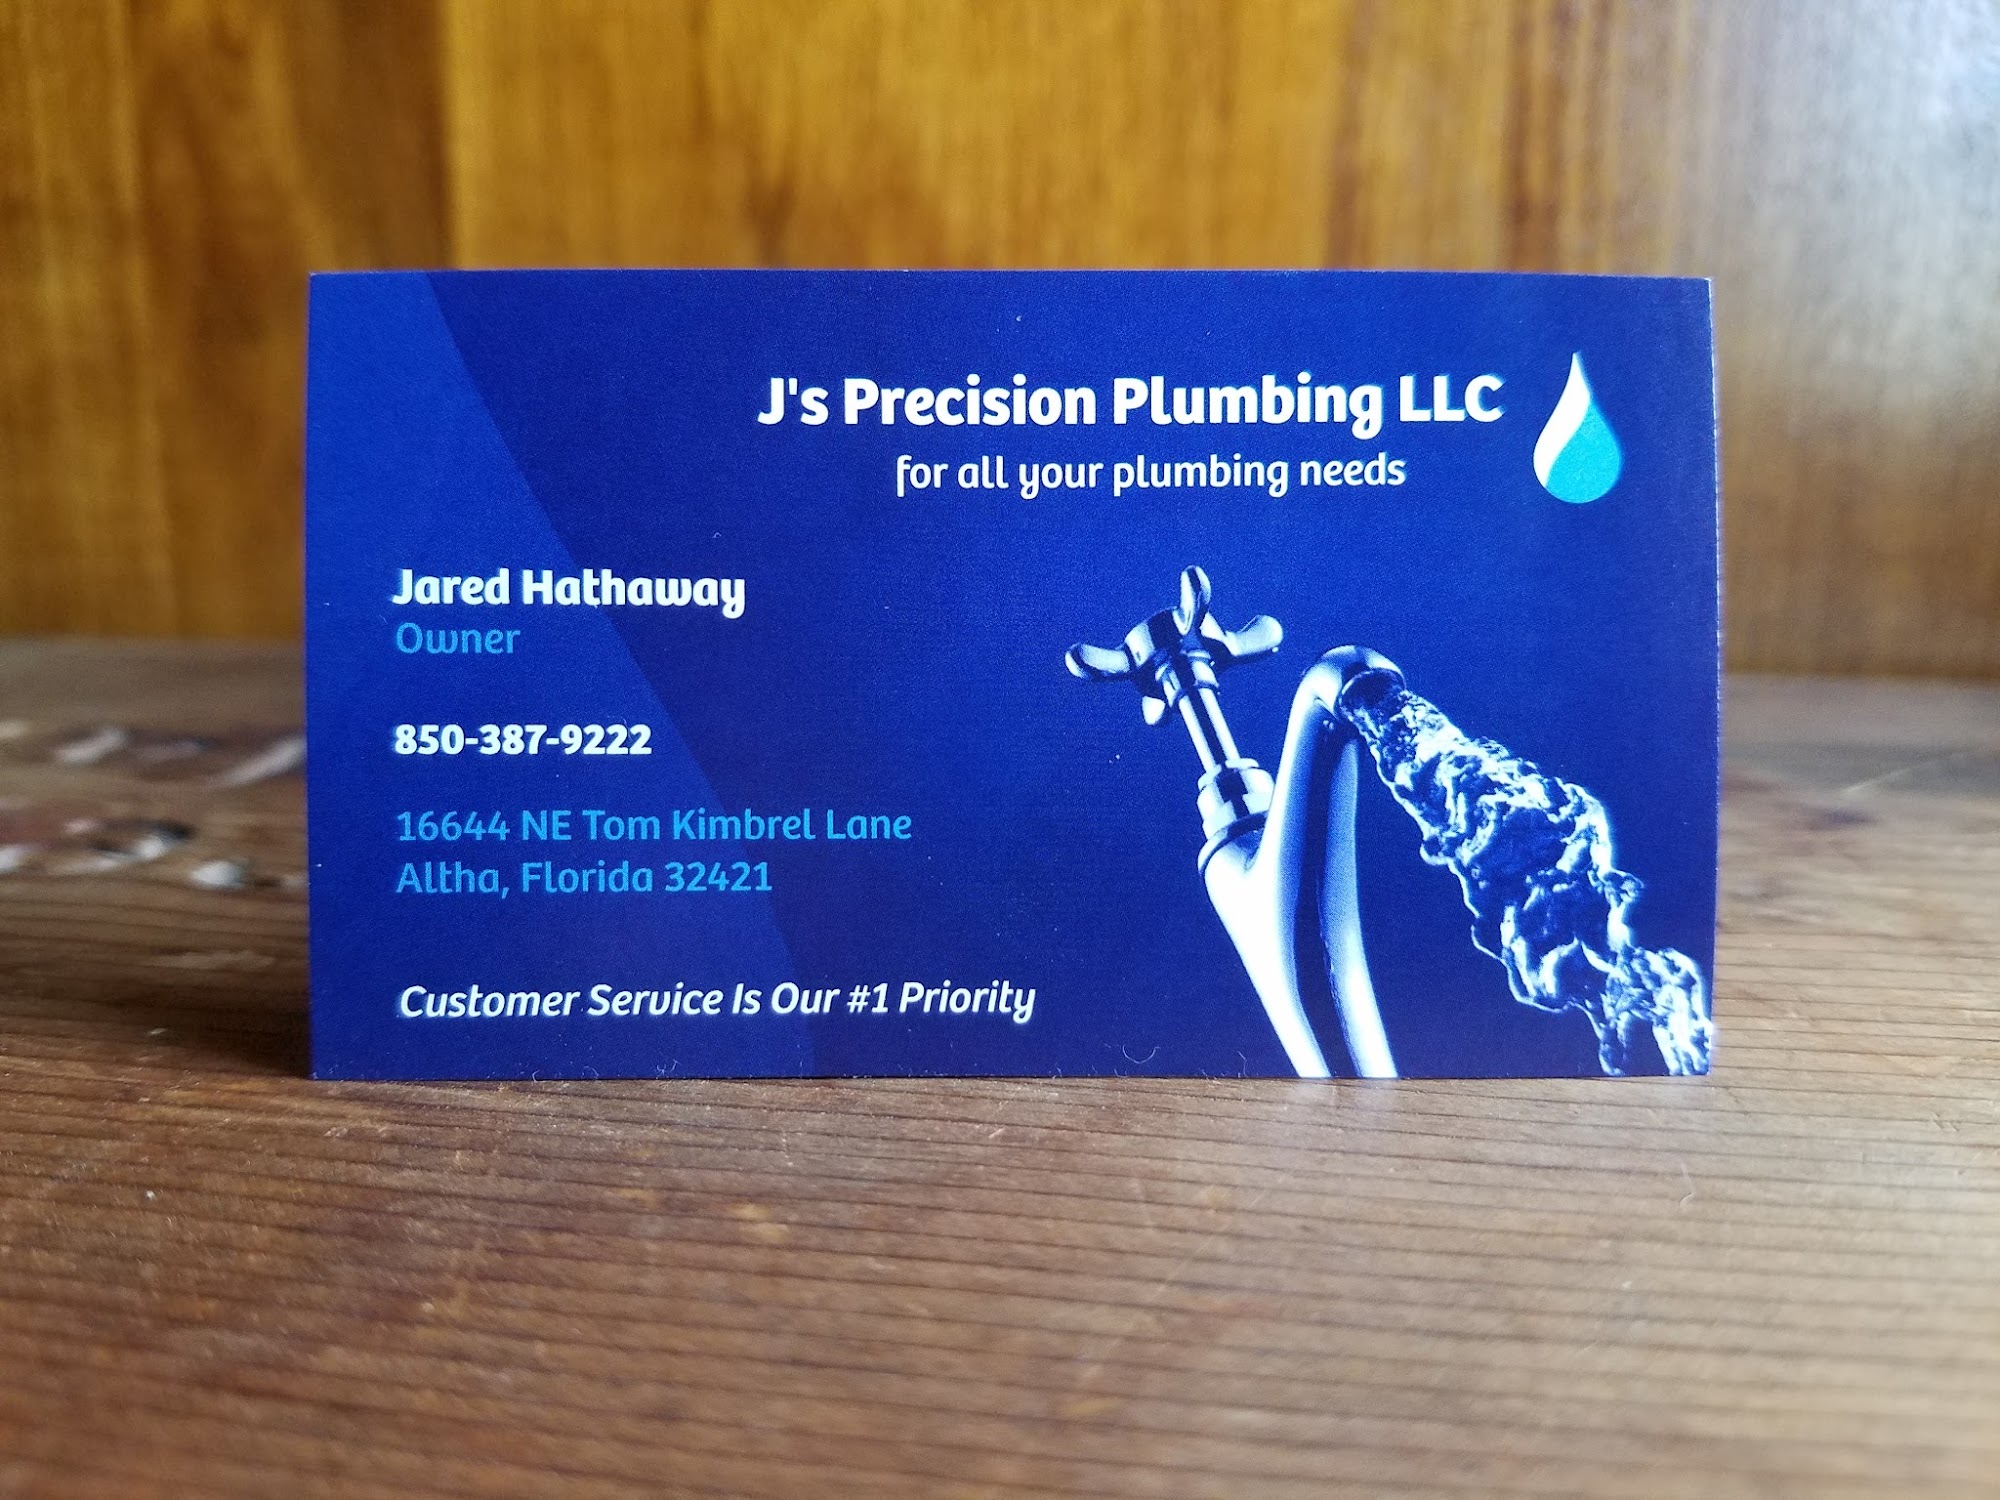 J's Precision Plumbing LLC 16644 NE Tom Kimbrel Ln, Altha Florida 32421